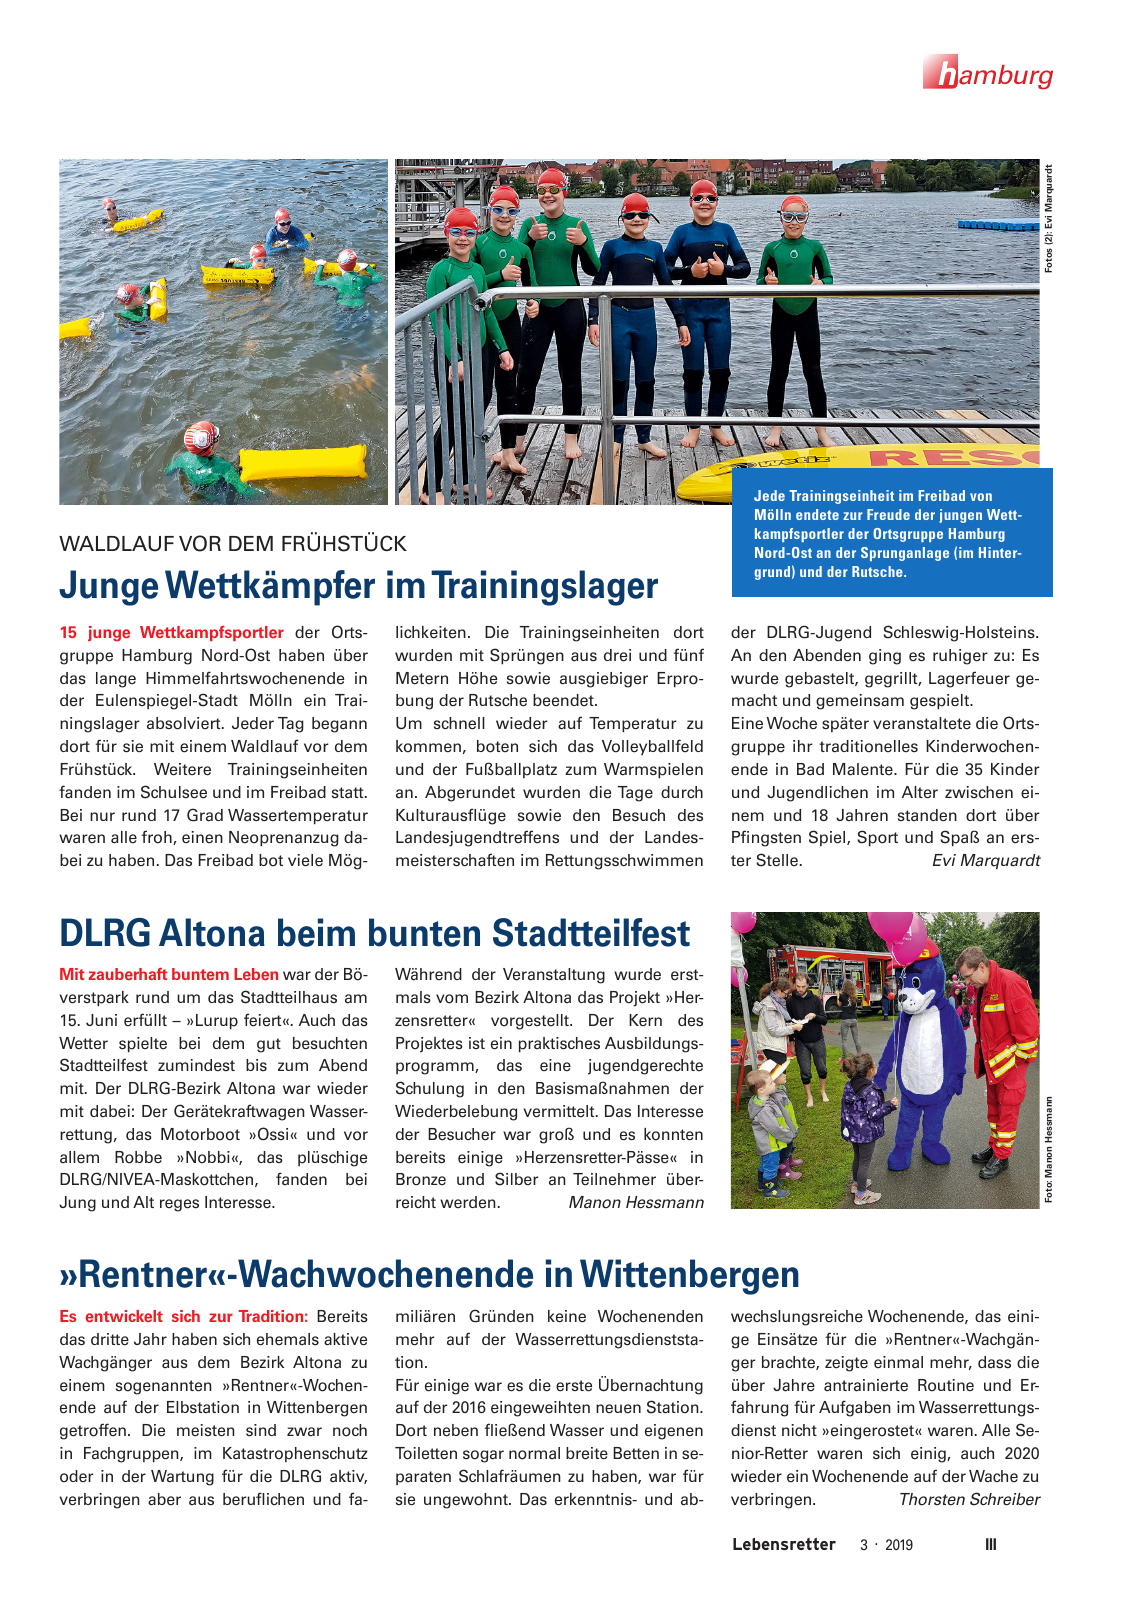 Vorschau Lebensretter 3/2019 - Hamburg Regionalausgabe Seite 5